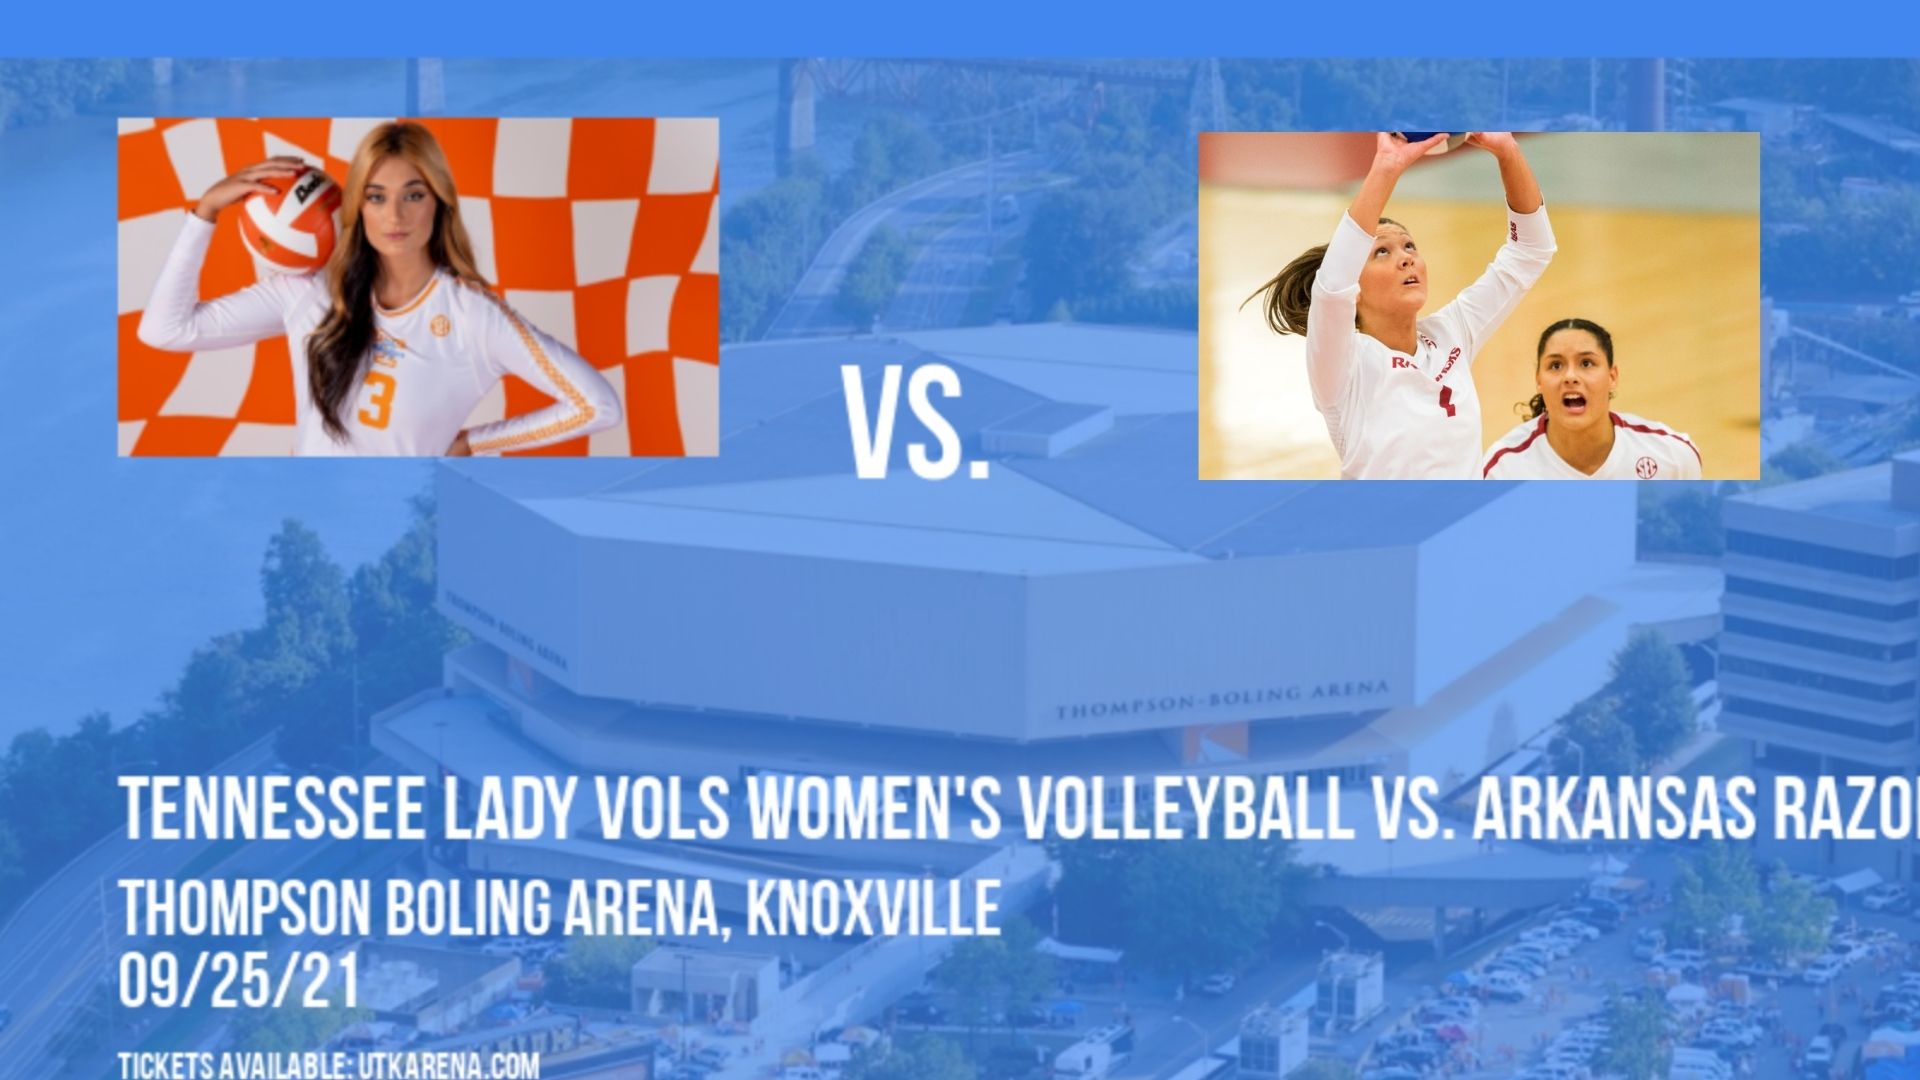 Tennessee Lady Vols Women's Volleyball vs. Arkansas Razorbacks at Thompson Boling Arena